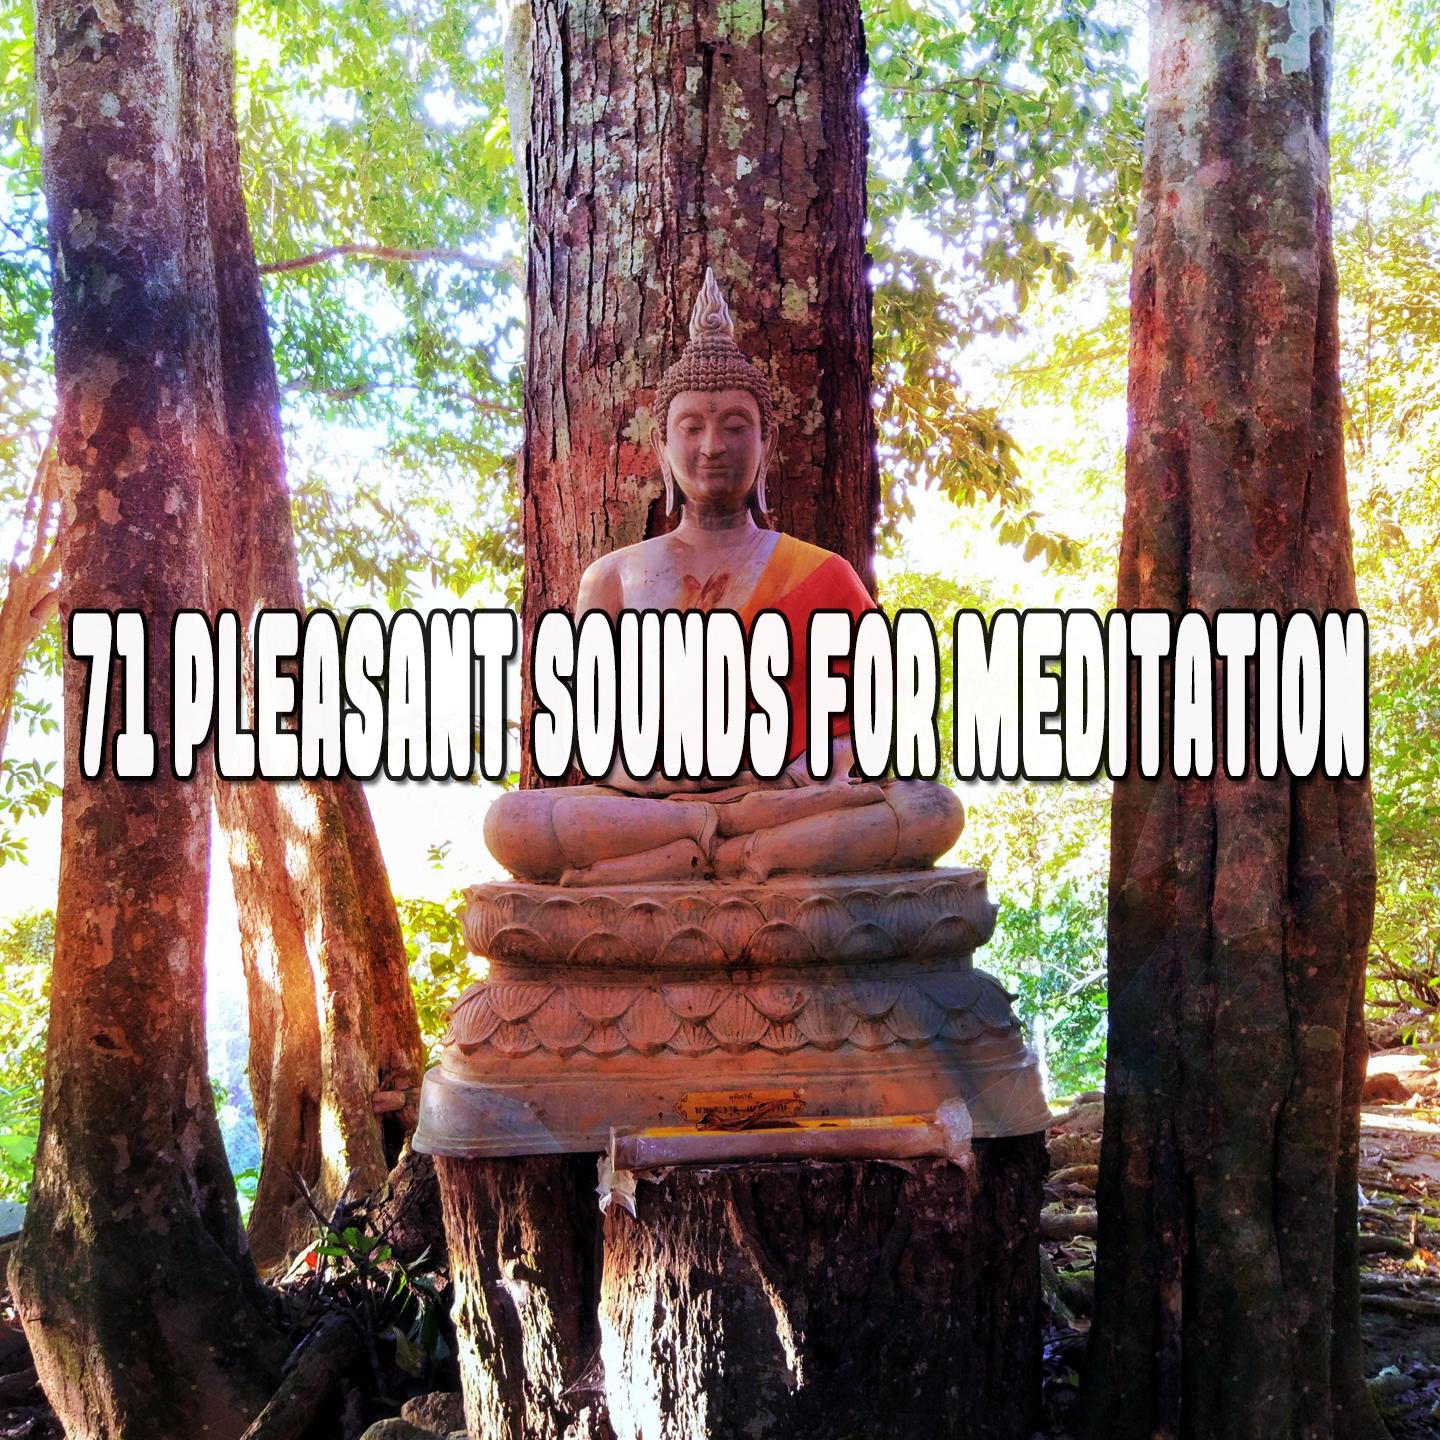 71 Pleasant Sounds For Meditation